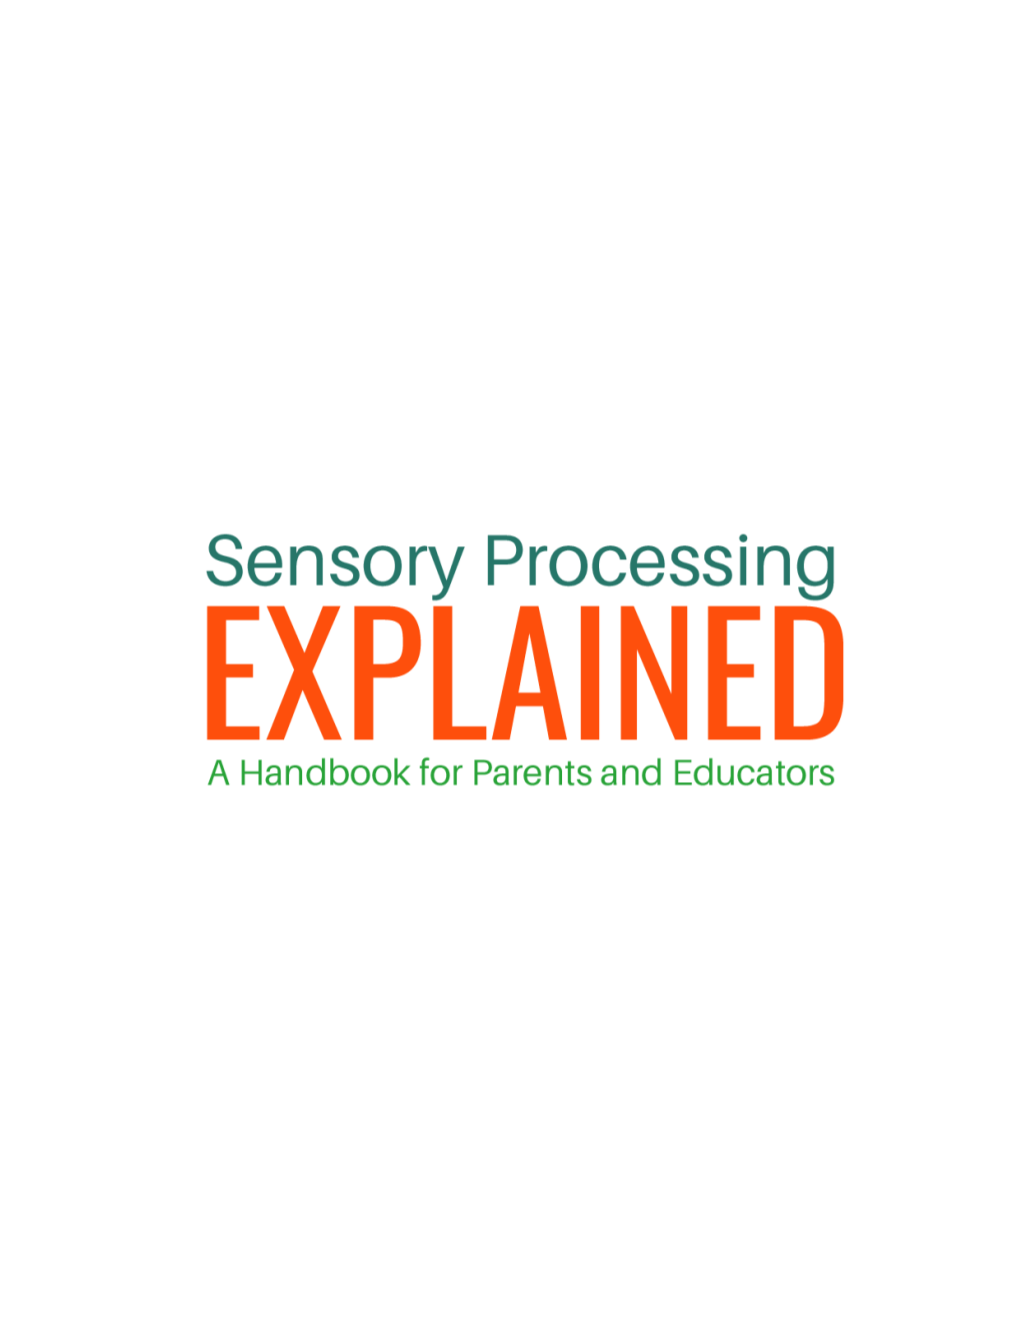 Sensory Processing Explained: a Handbook for Parents and Educators